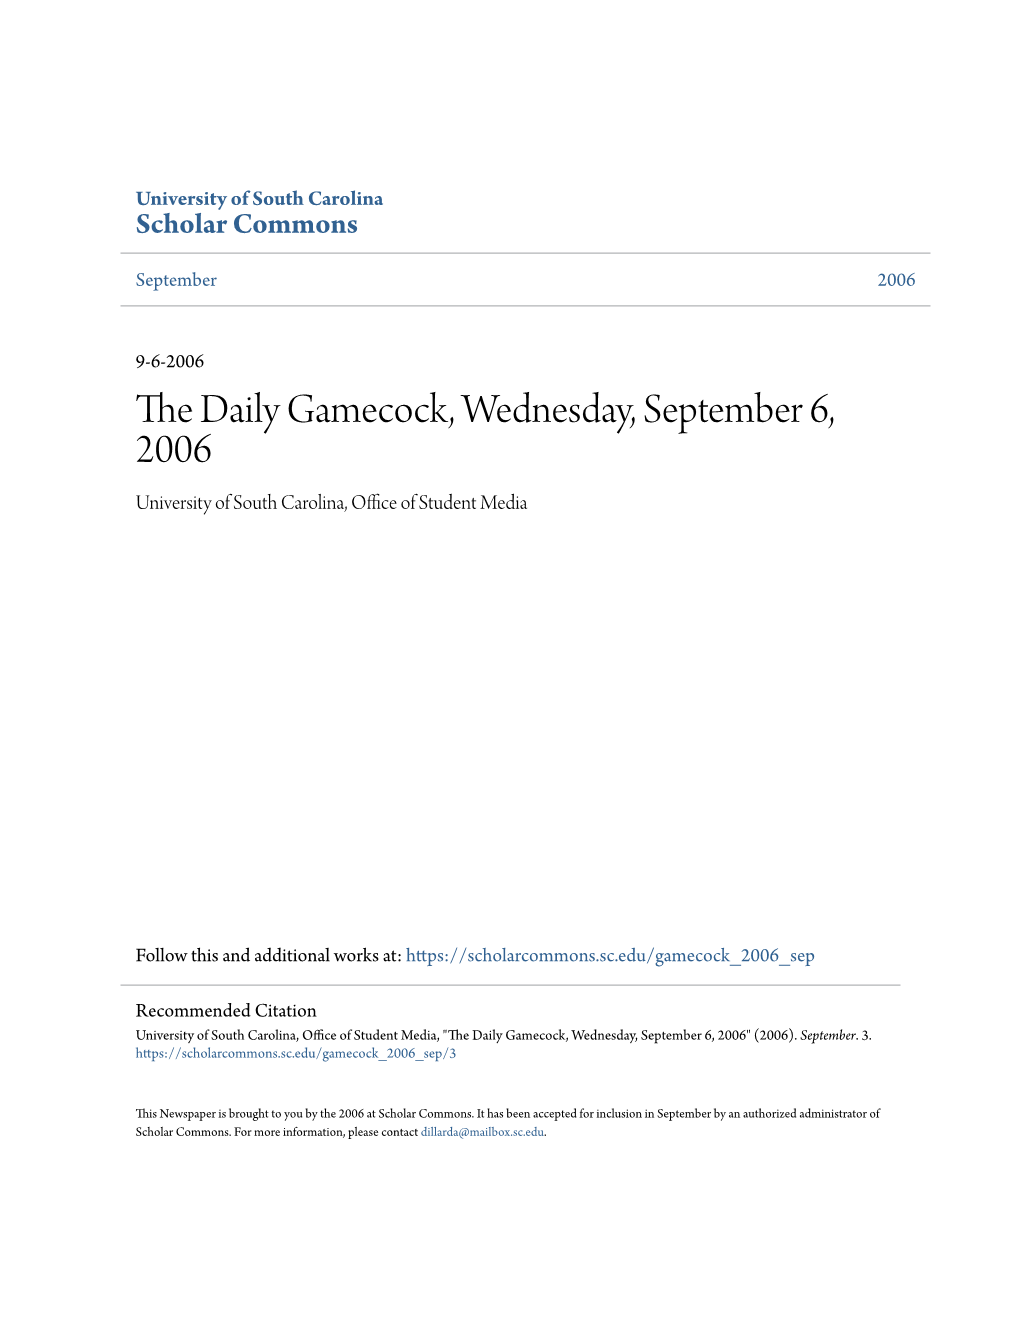 The Daily Gamecock, Wednesday, September 6, 2006